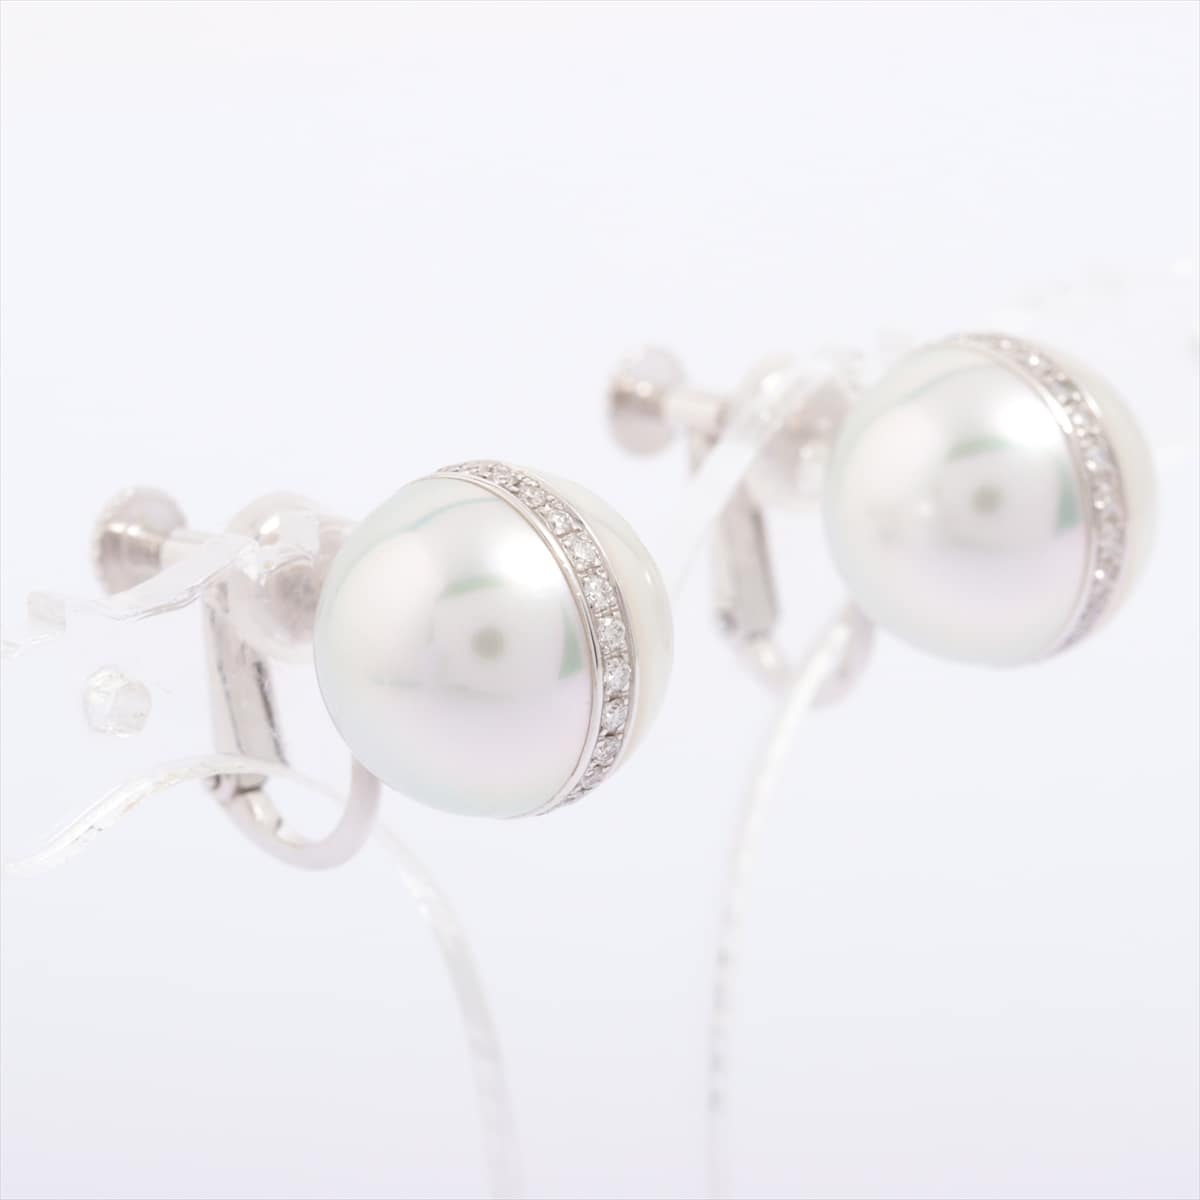 TASAKI Balance Pearl diamond Earings 750(WG) Total 8.4g 0.10 0.10